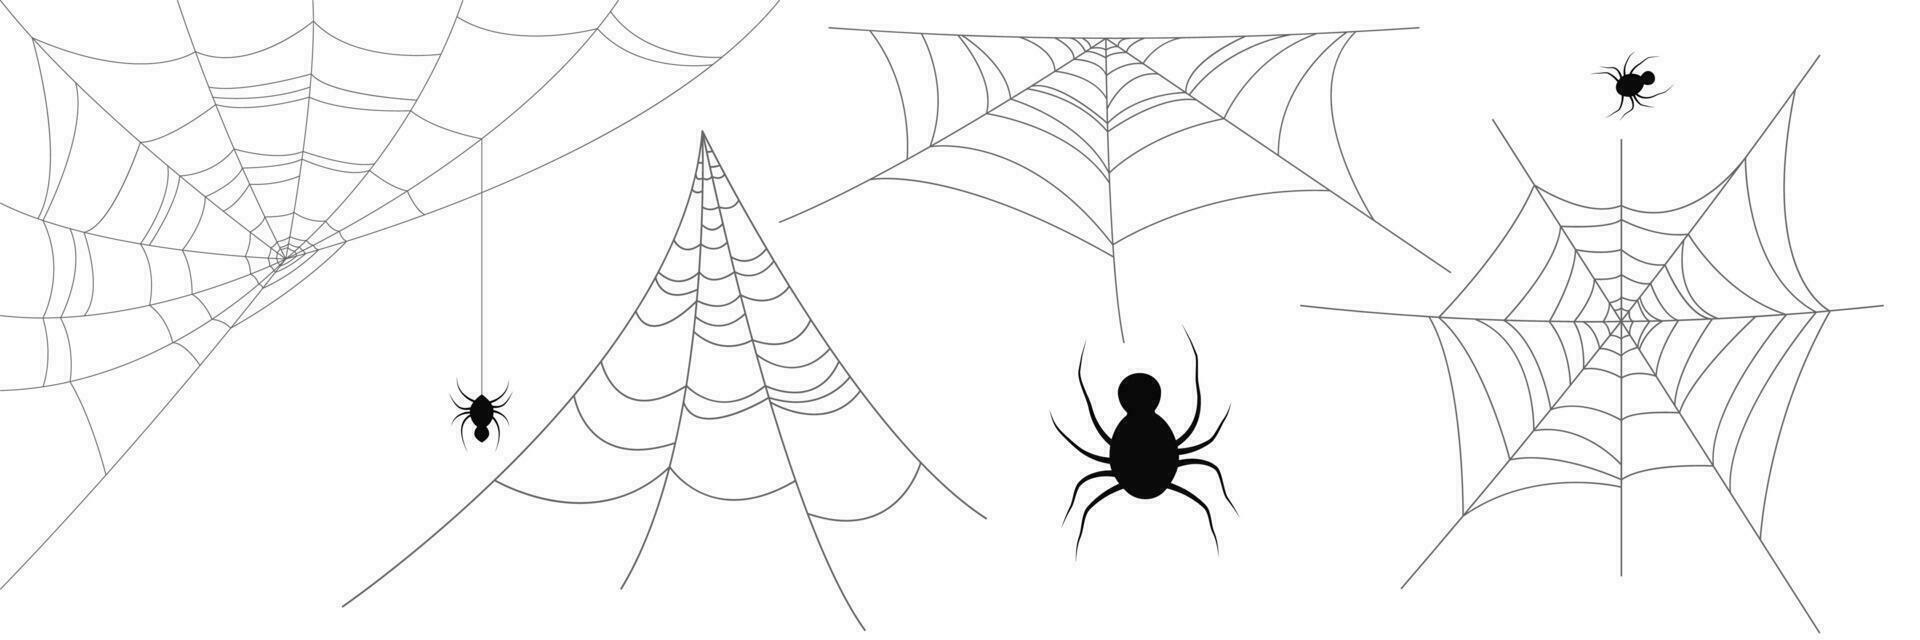 Halloween spider web monochrome. vector illustration EPS10.